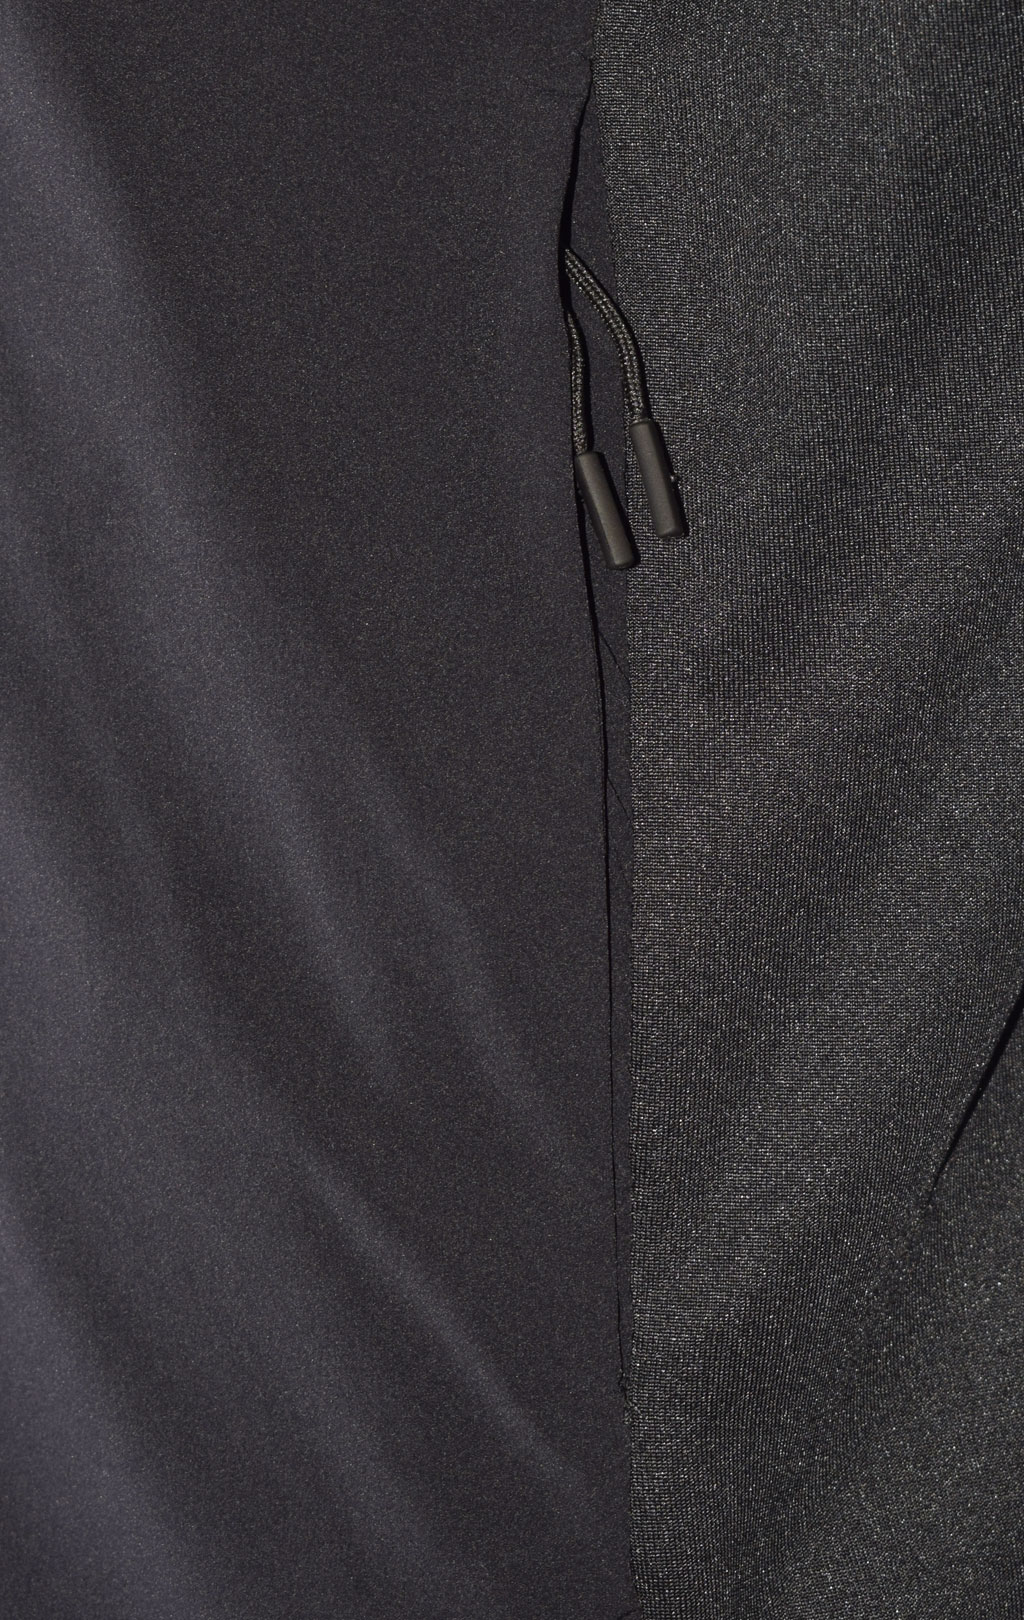 Куртка Pentagon Thinsulate PANTHIRAS утеплённая с капюшоном black 08032 